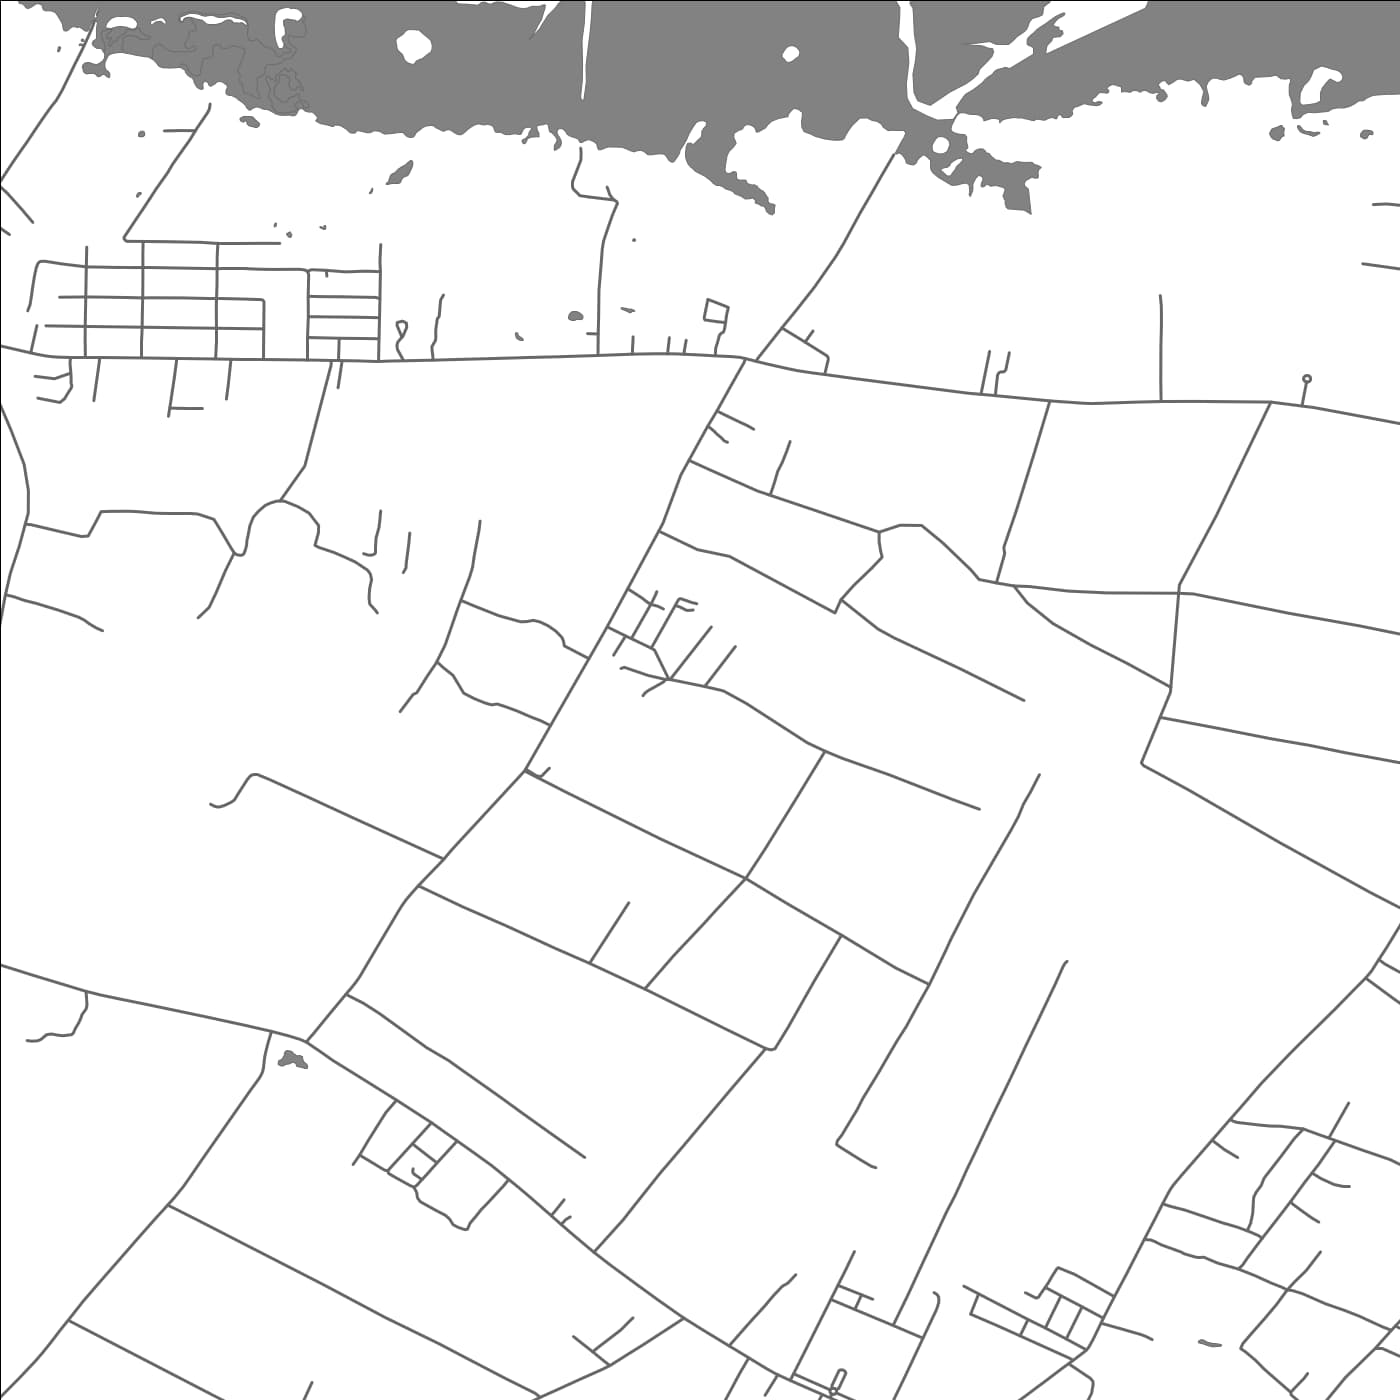 ROAD MAP OF LAKEPA, TONGA BY MAPBAKES